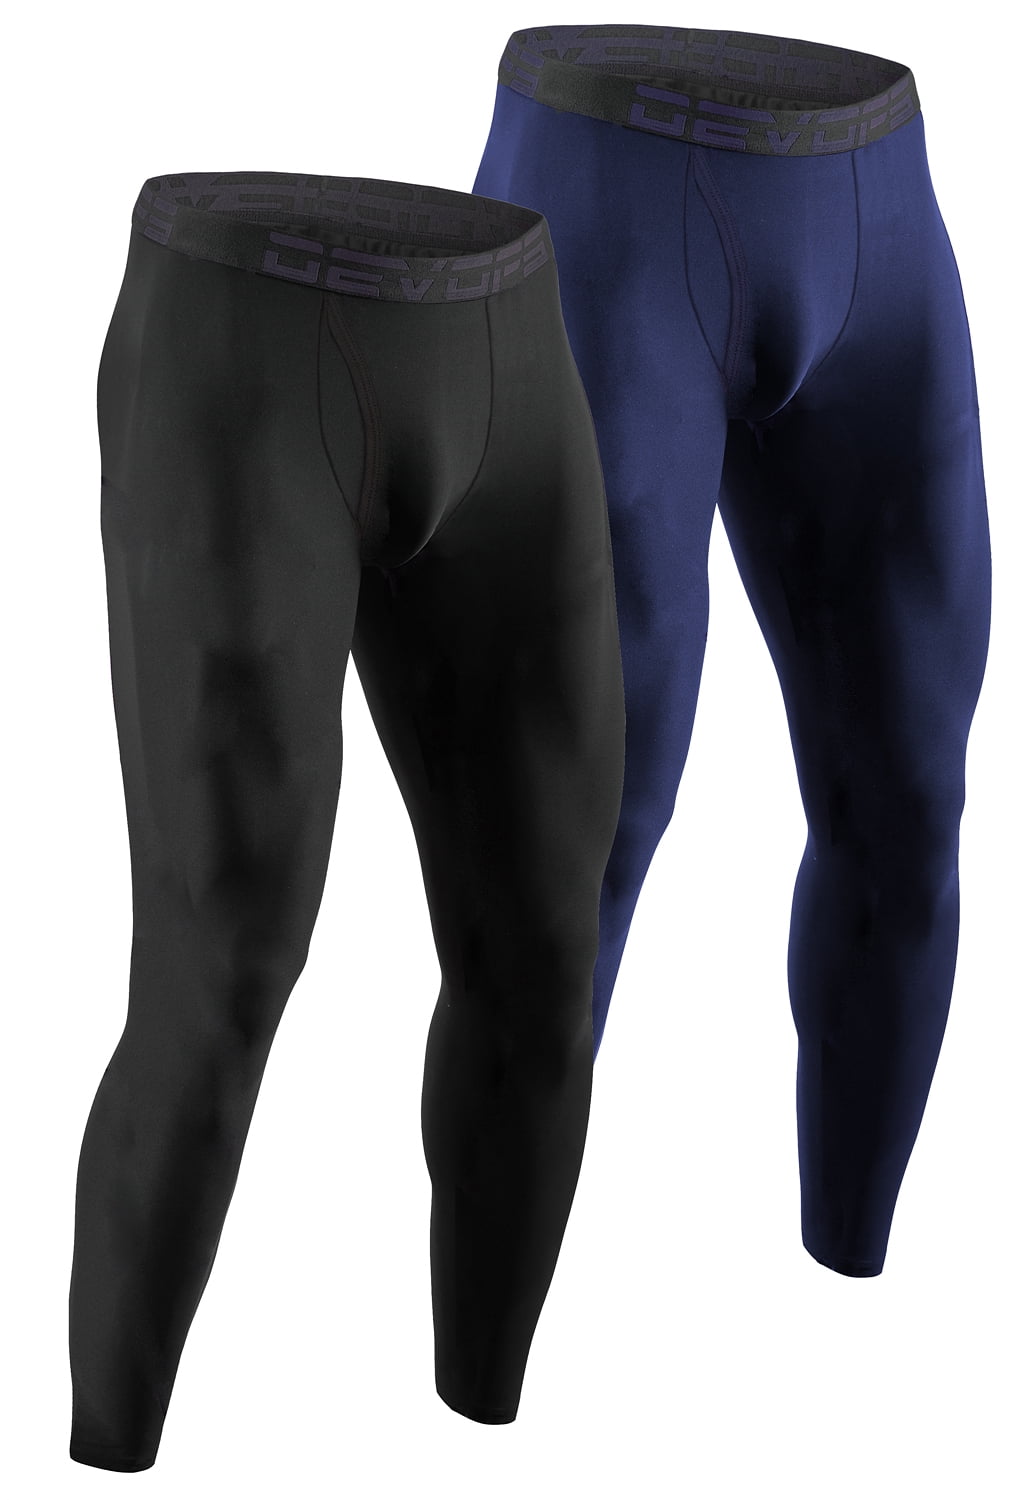 DevOps DEVOPS Boys UPF 50+ compression Tights Sport Leggings Baselayer Pants  (Medium, BlackcharcoalNavy)